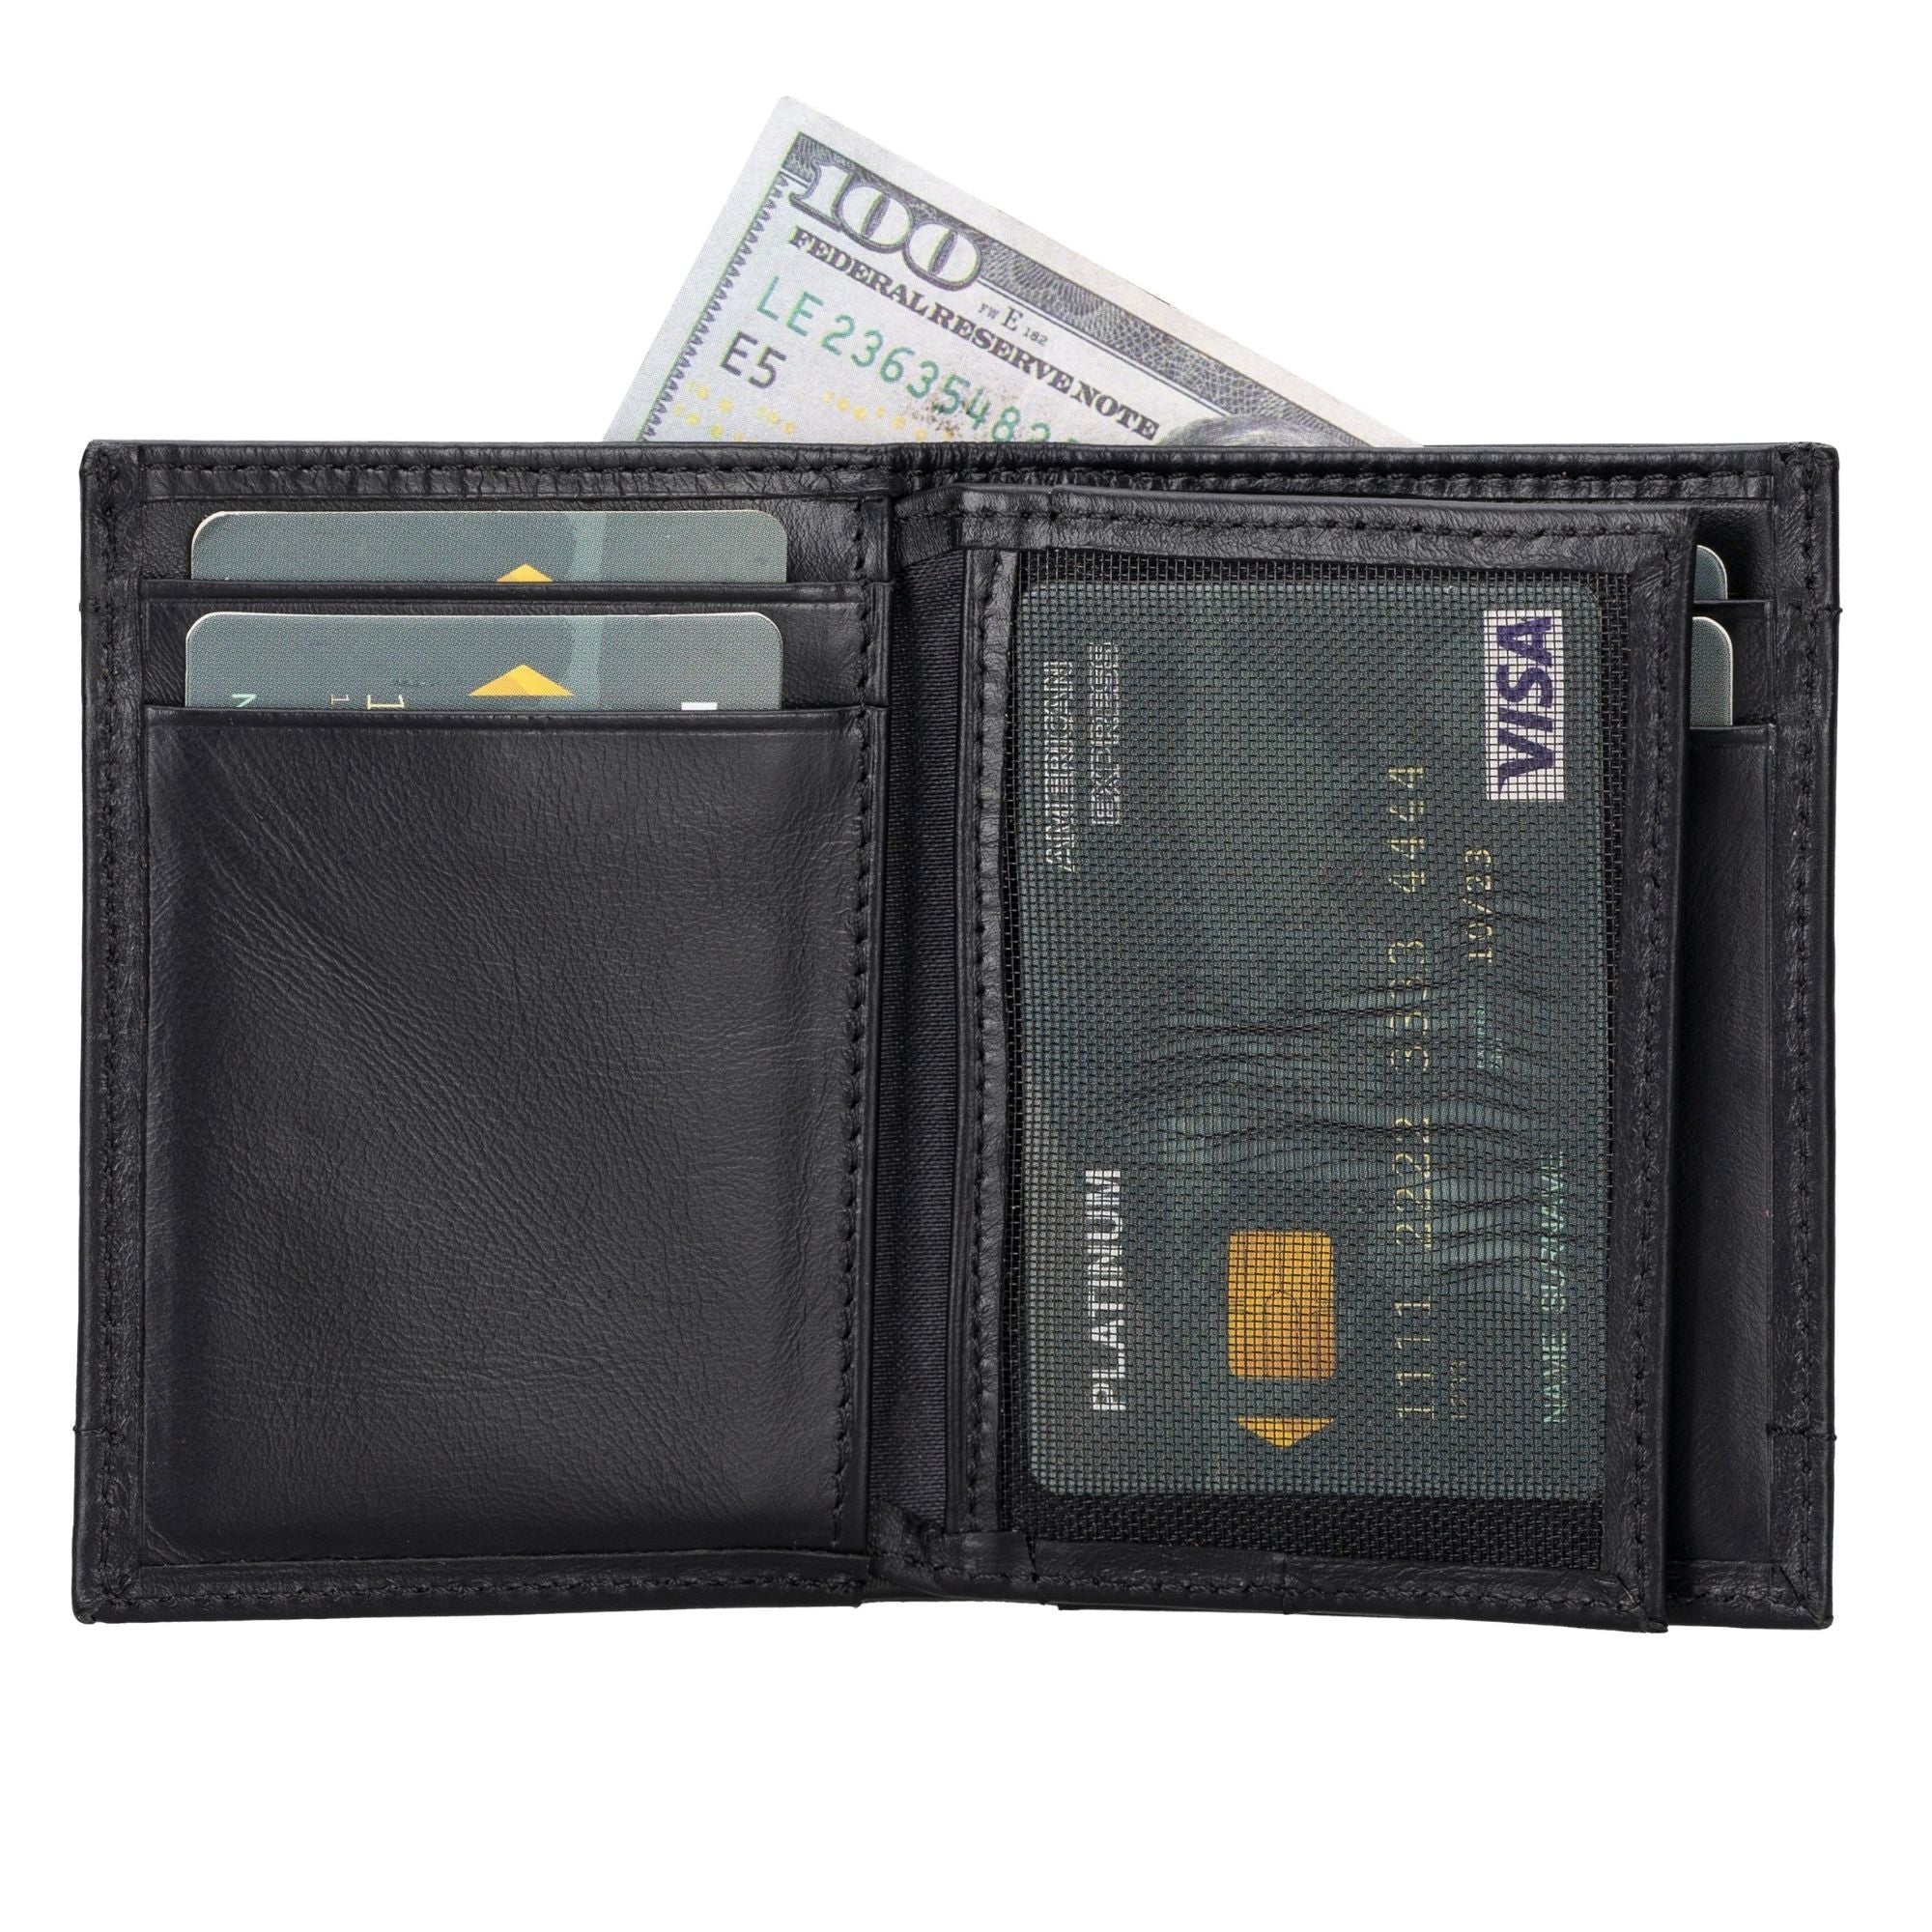 Glendo Apple AirTag Slot Leather Wallet, Handcrafted, Unisex - Black - TORONATA